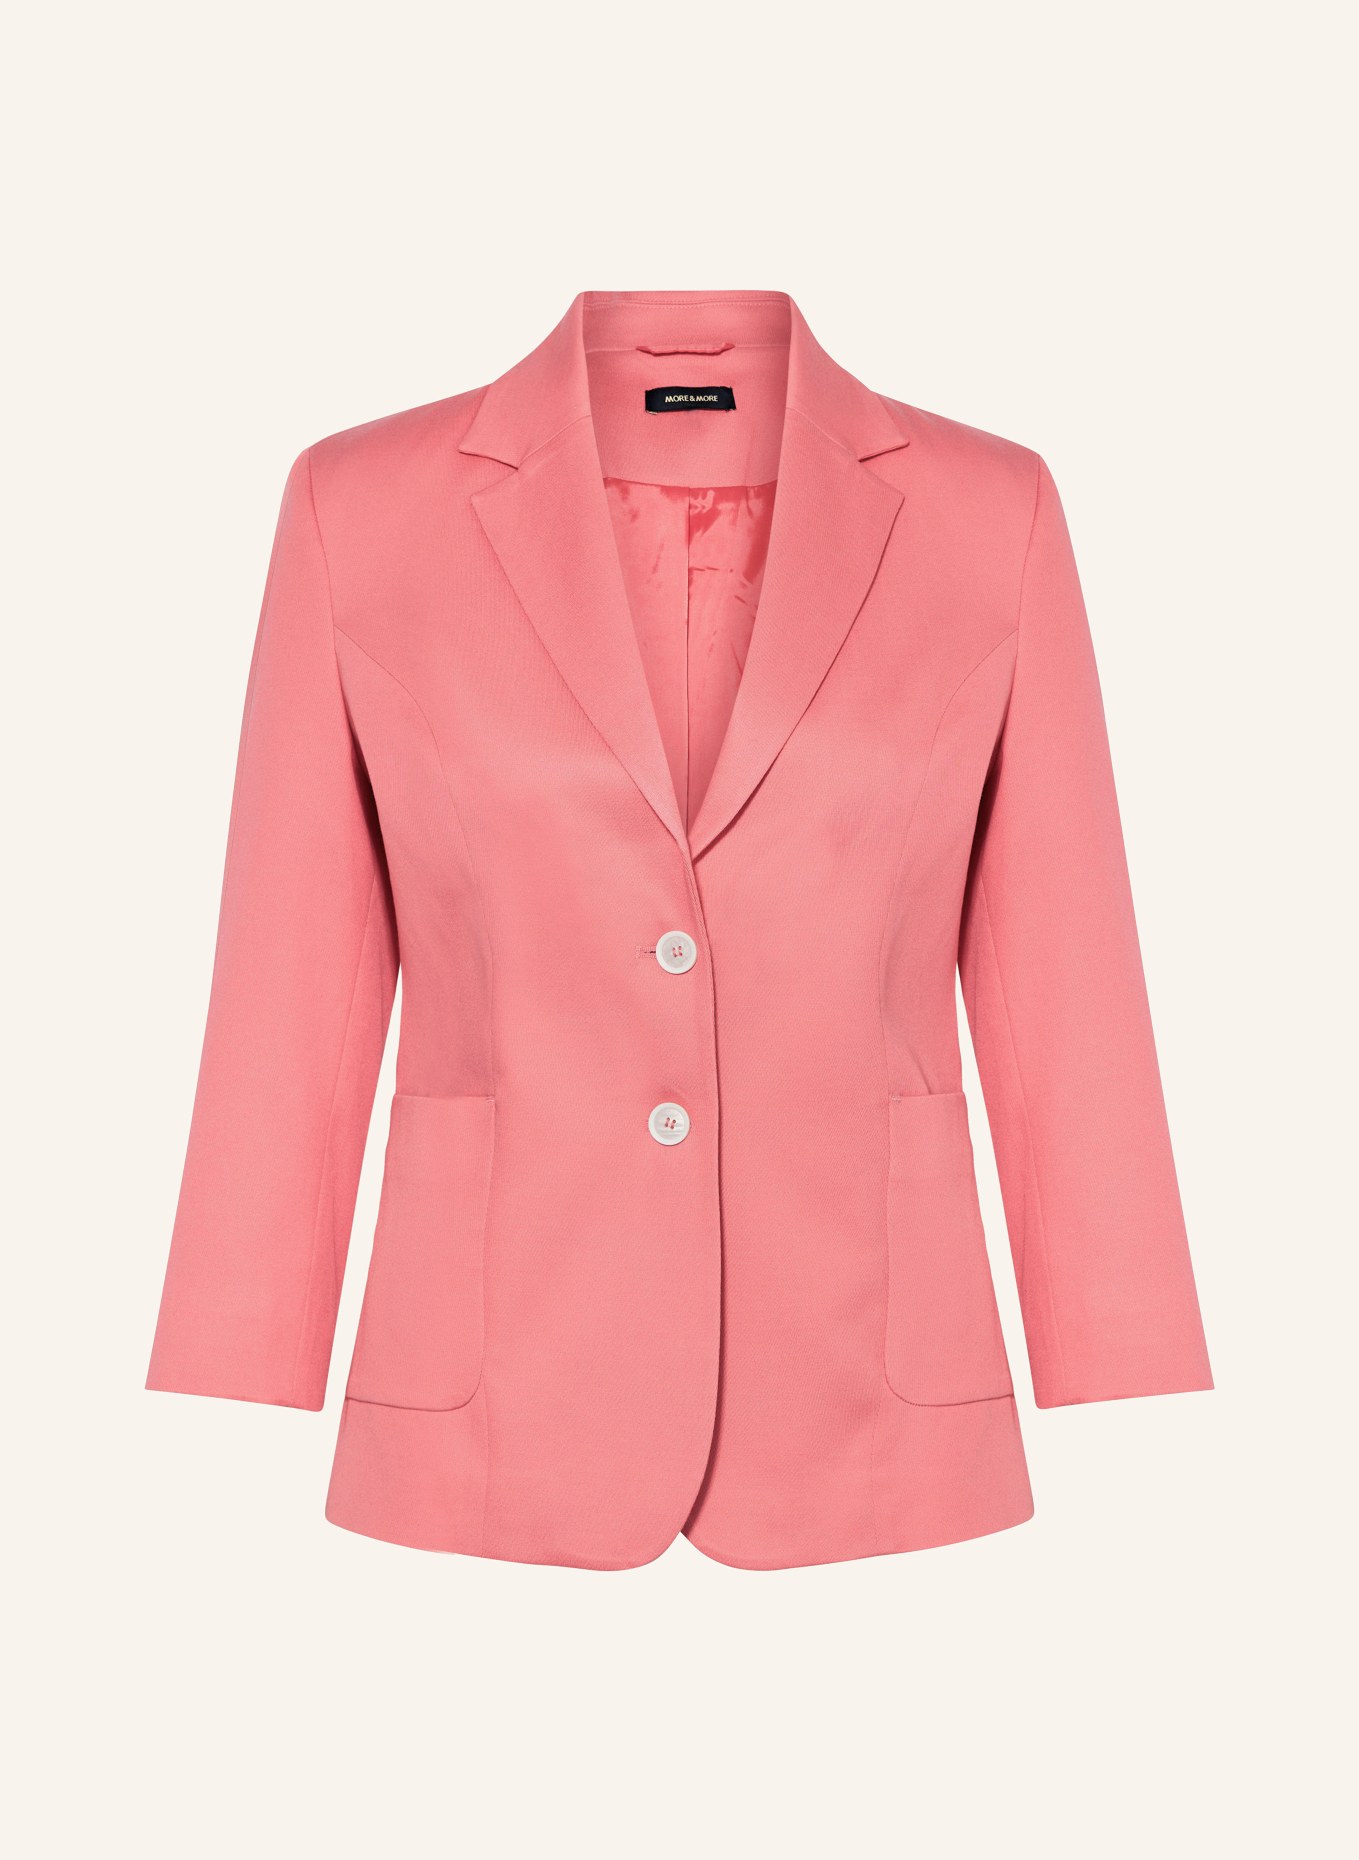 MORE & MORE Jerseyblazer, Farbe: 0835 sorbet pink (Bild 1)